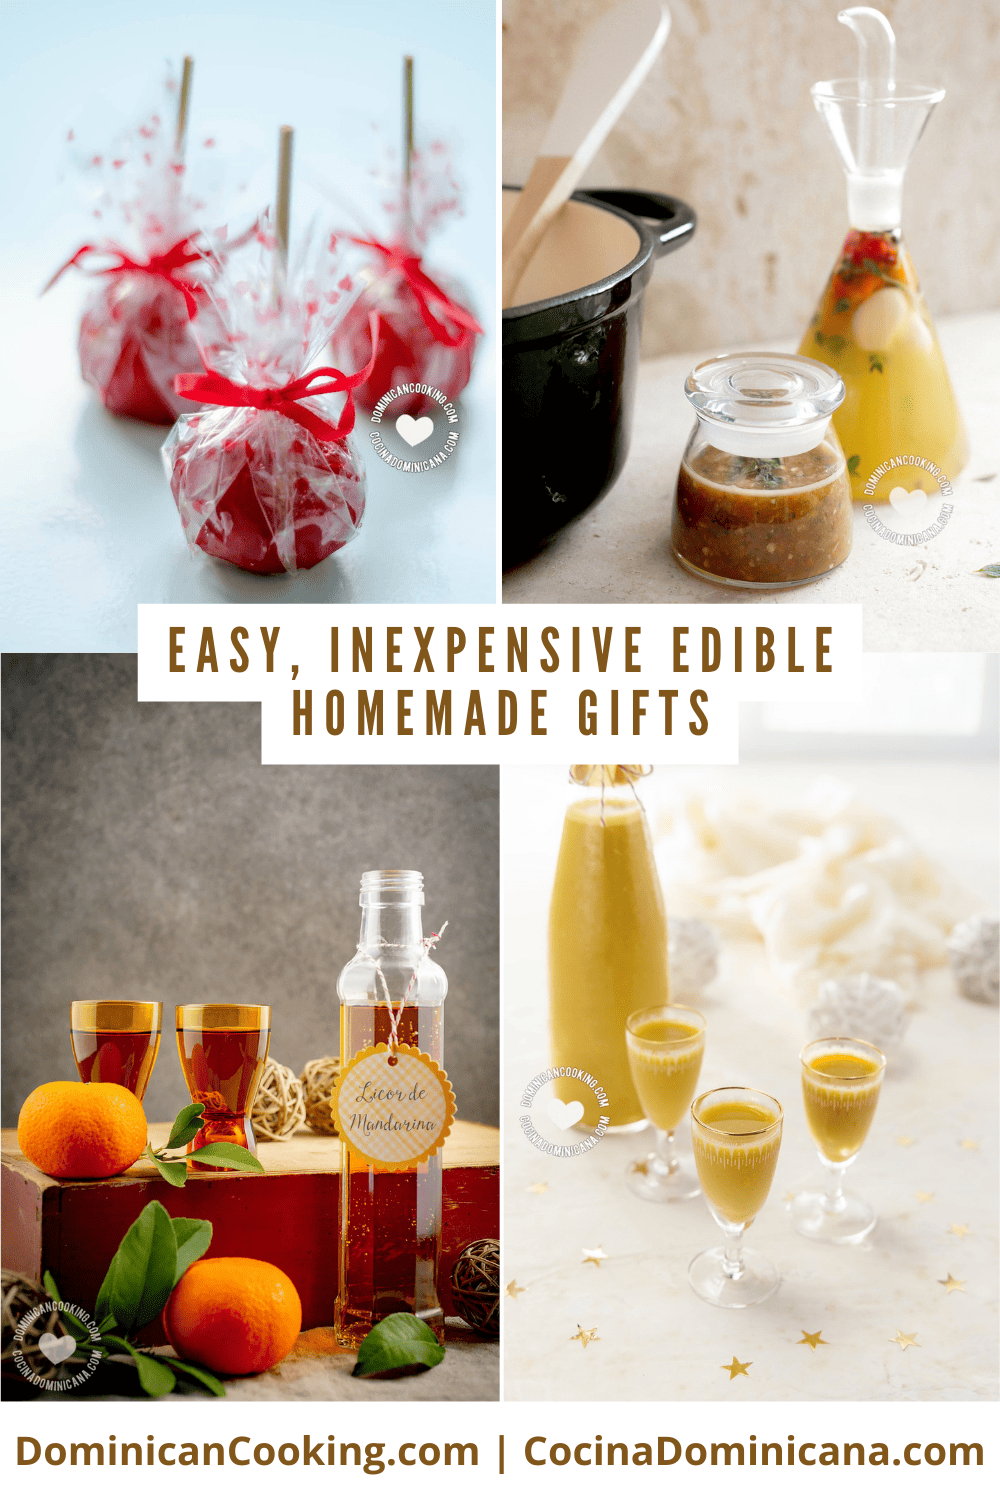 Easy, inexpensive edible homemade gifts.